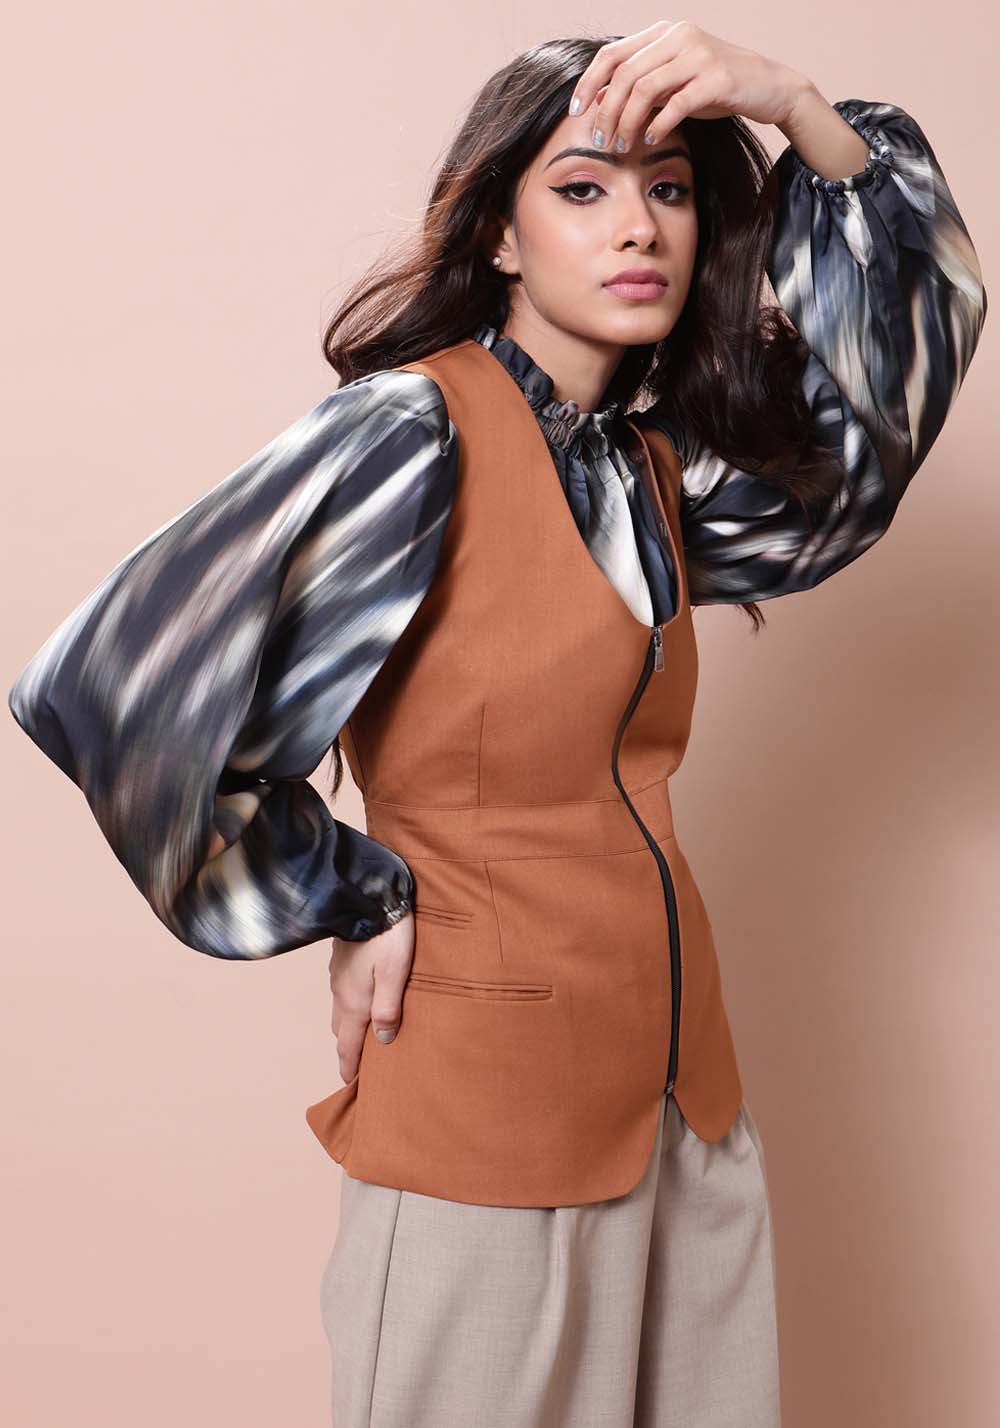 Women's  Round-Neck brown Waistcoat with Zip Closure